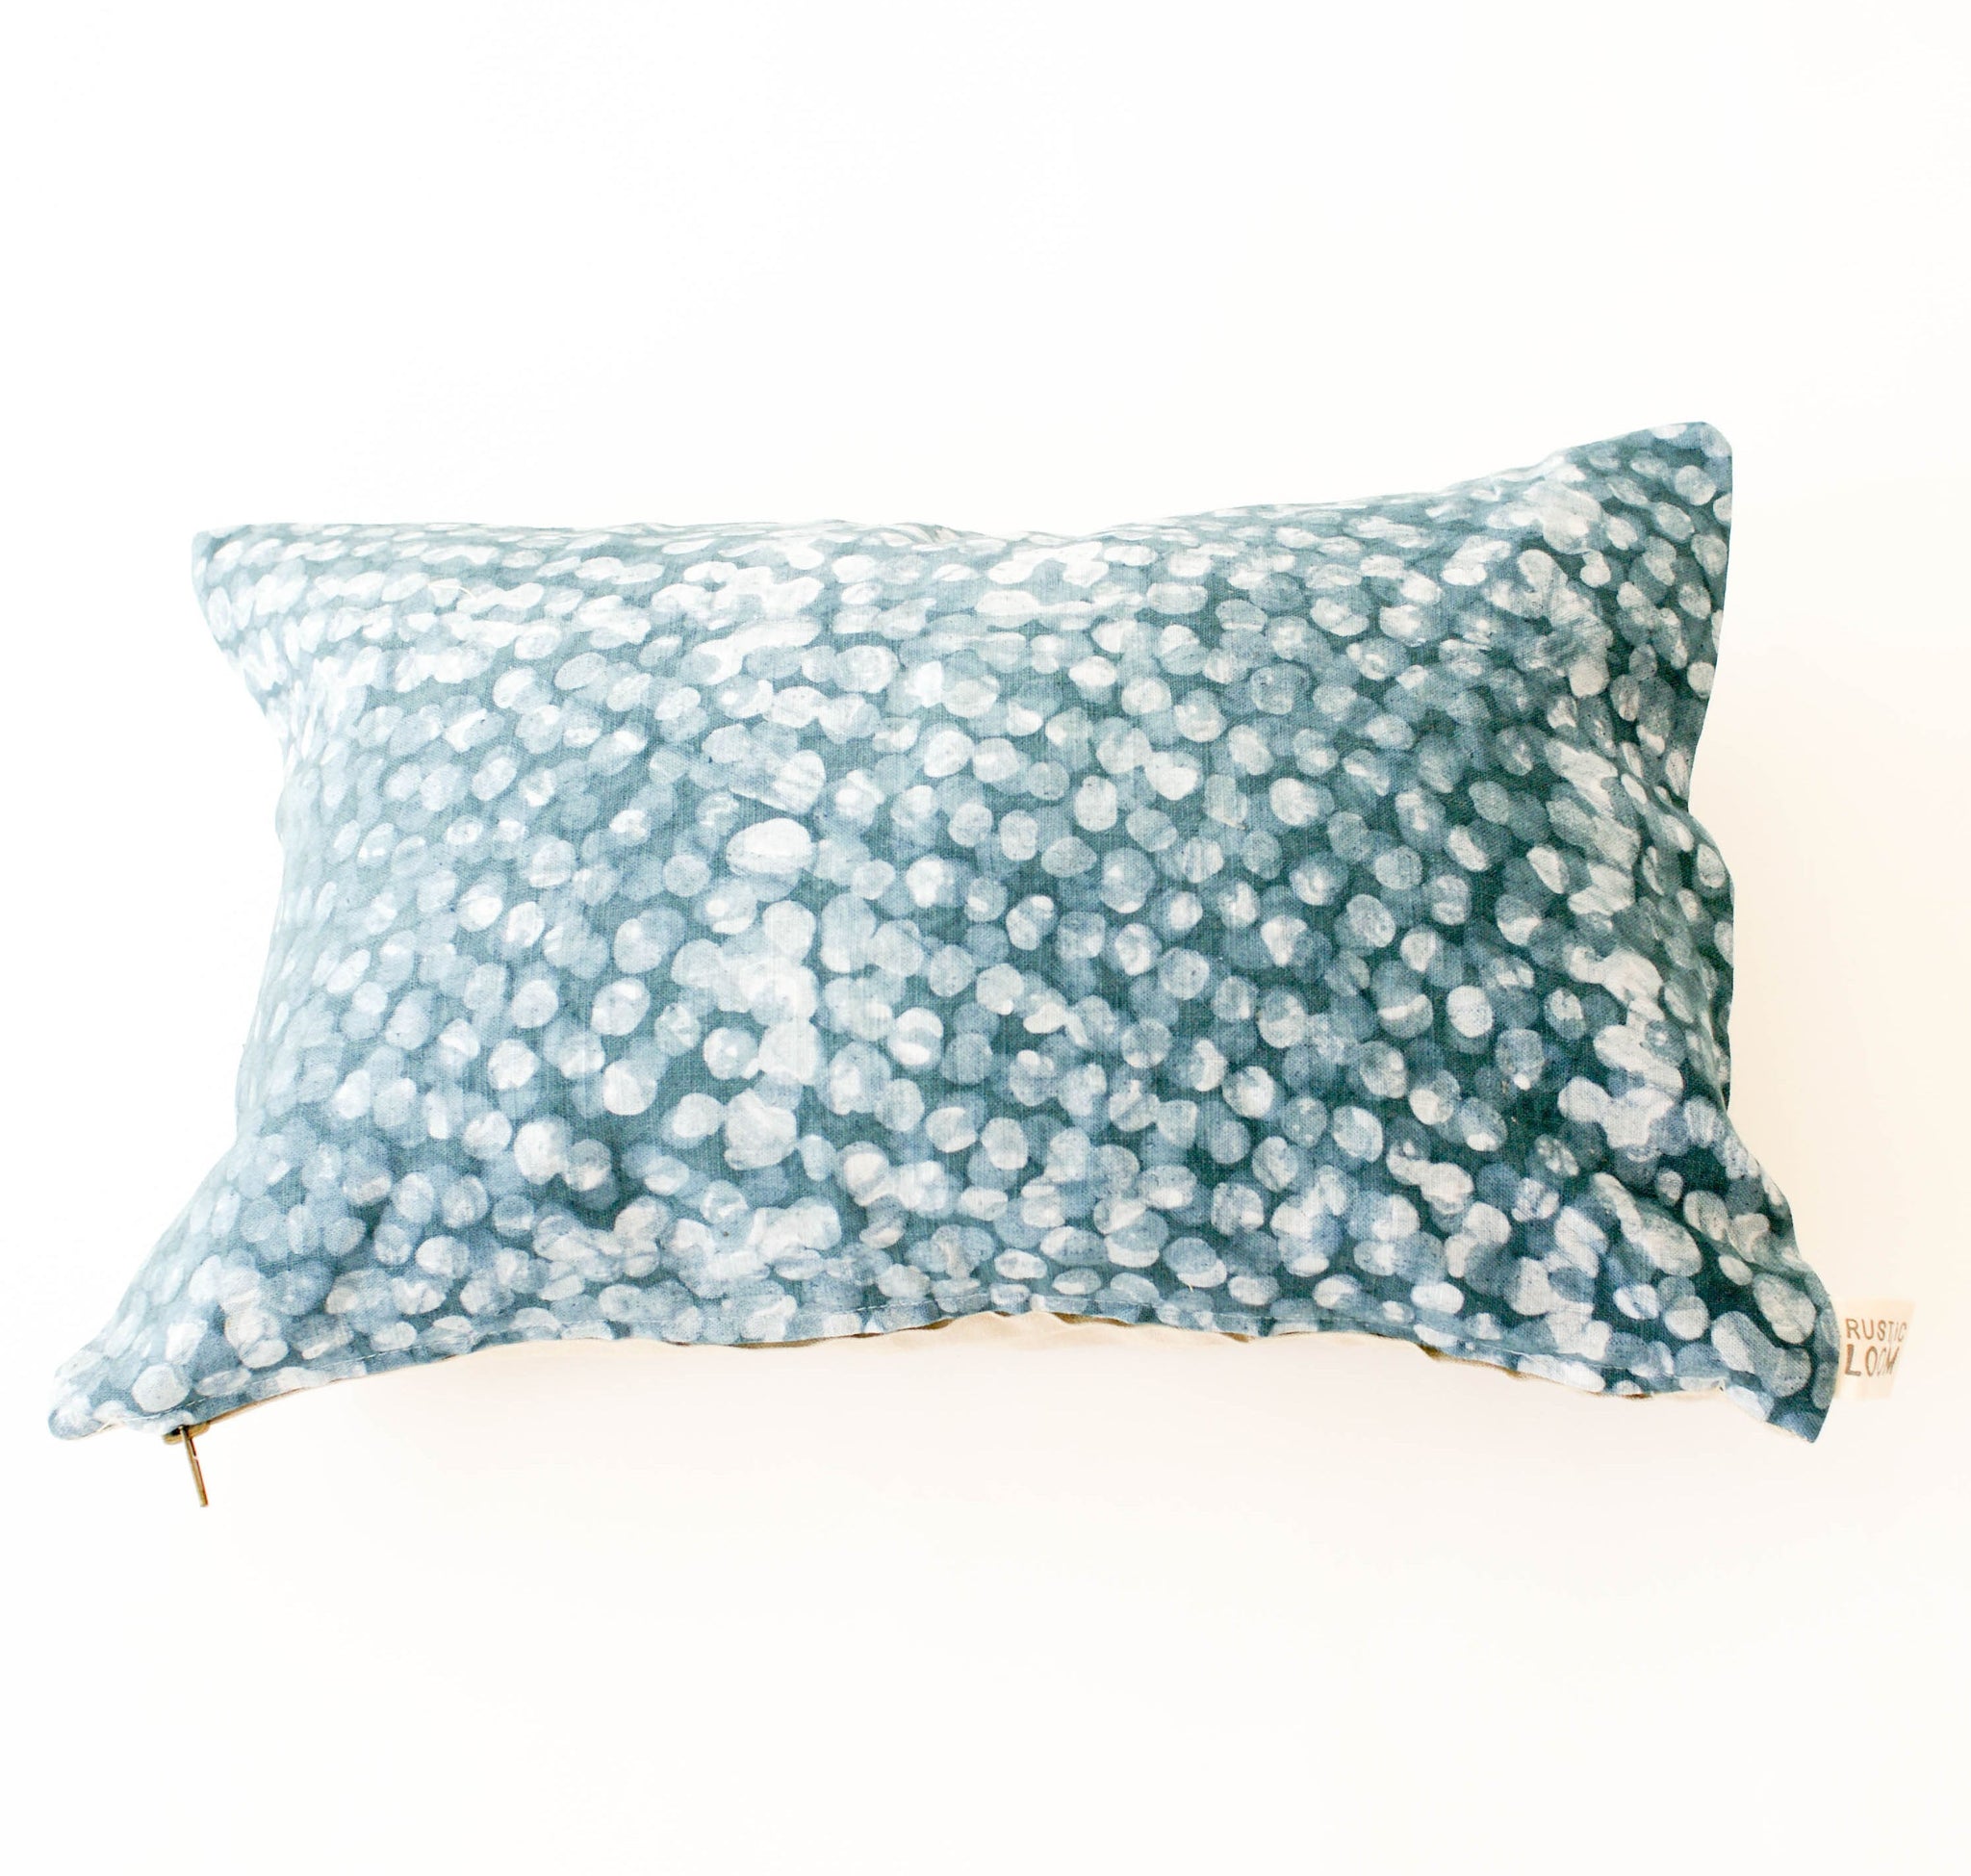 Teal Dot Linen Lumbar Pillow 12 x 18